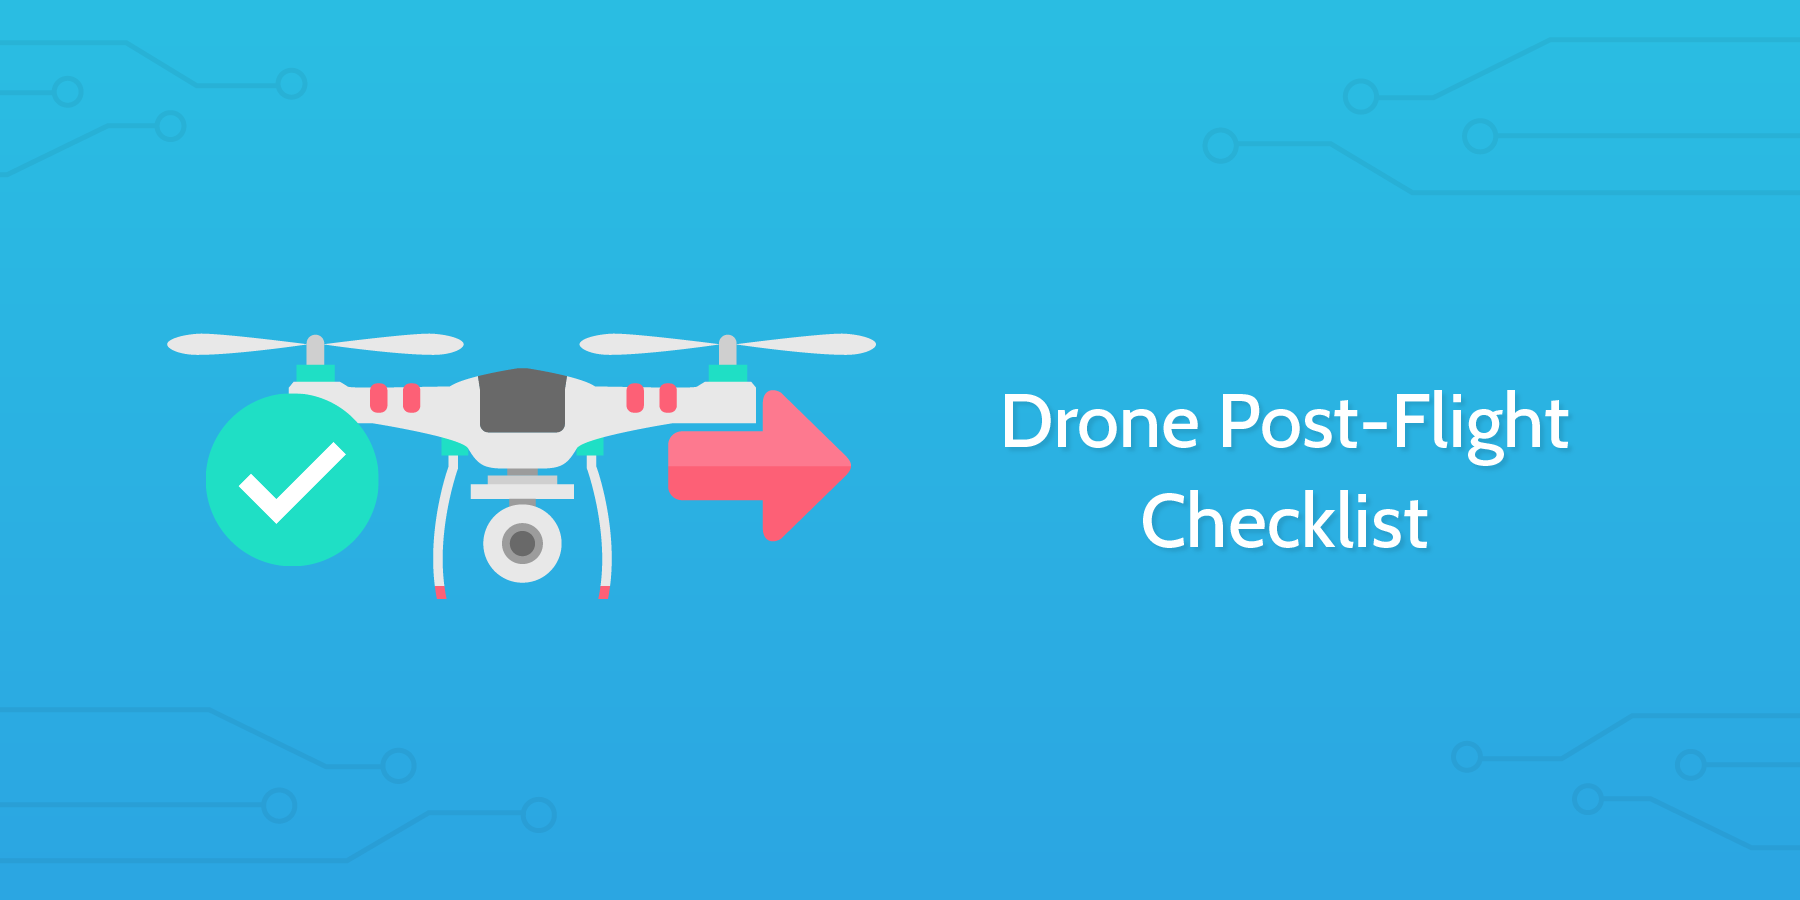 Drone Post-Flight Checklist